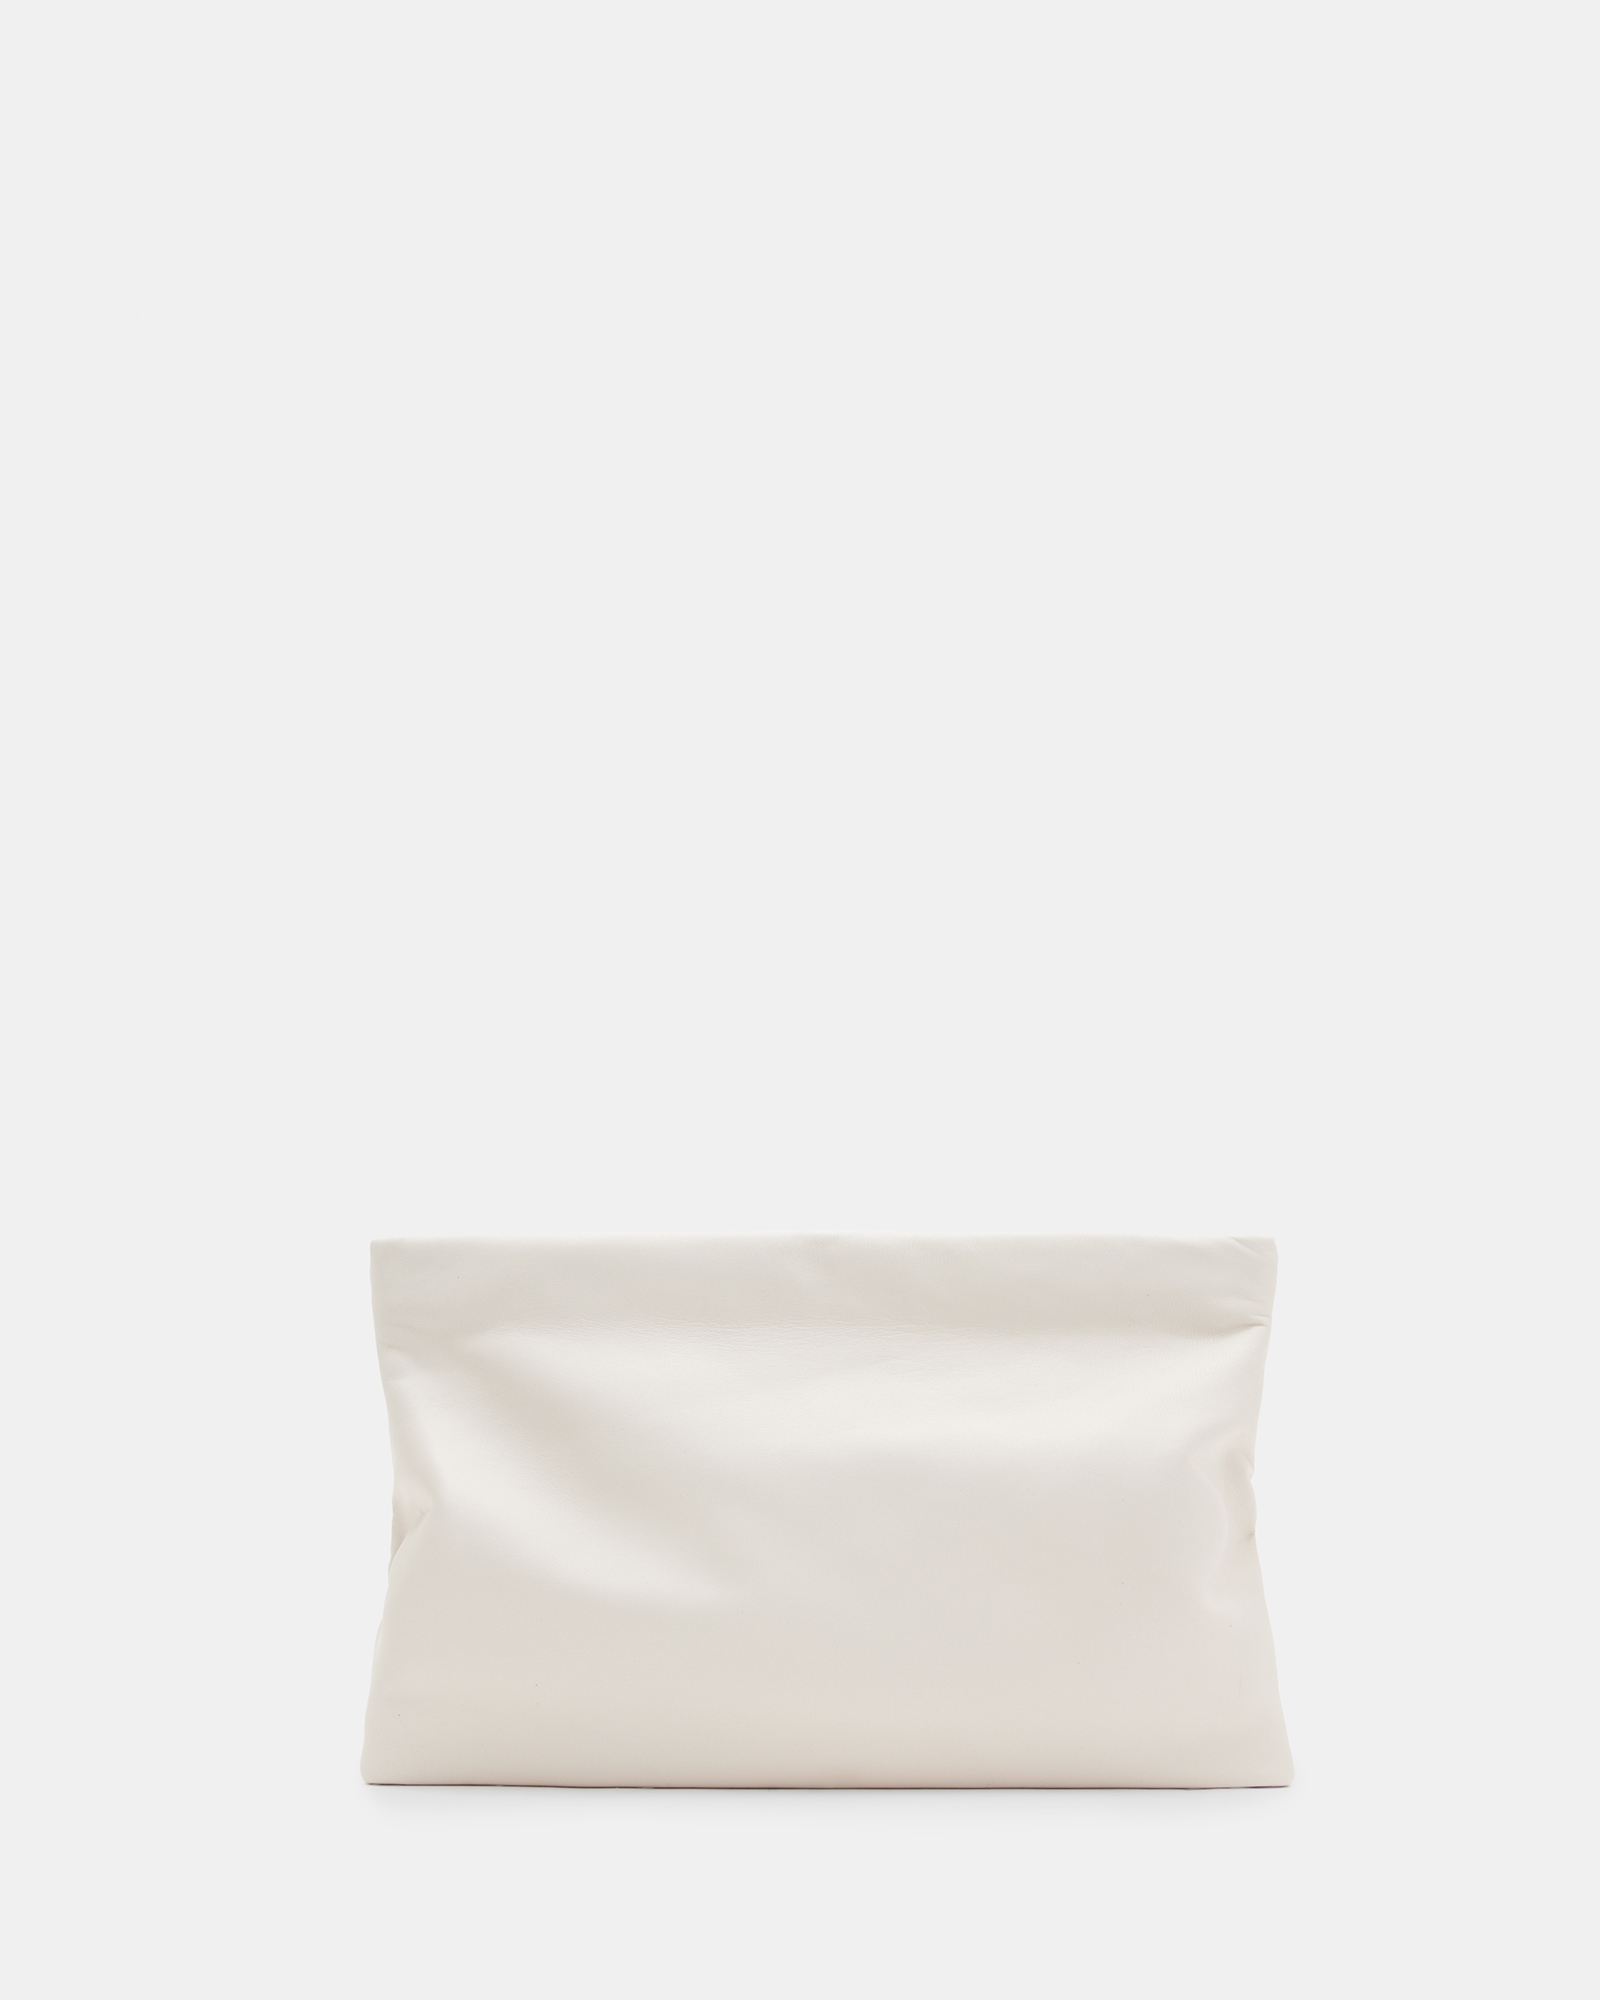 AllSaints Bettina Leather Clutch Bag,, Desert White